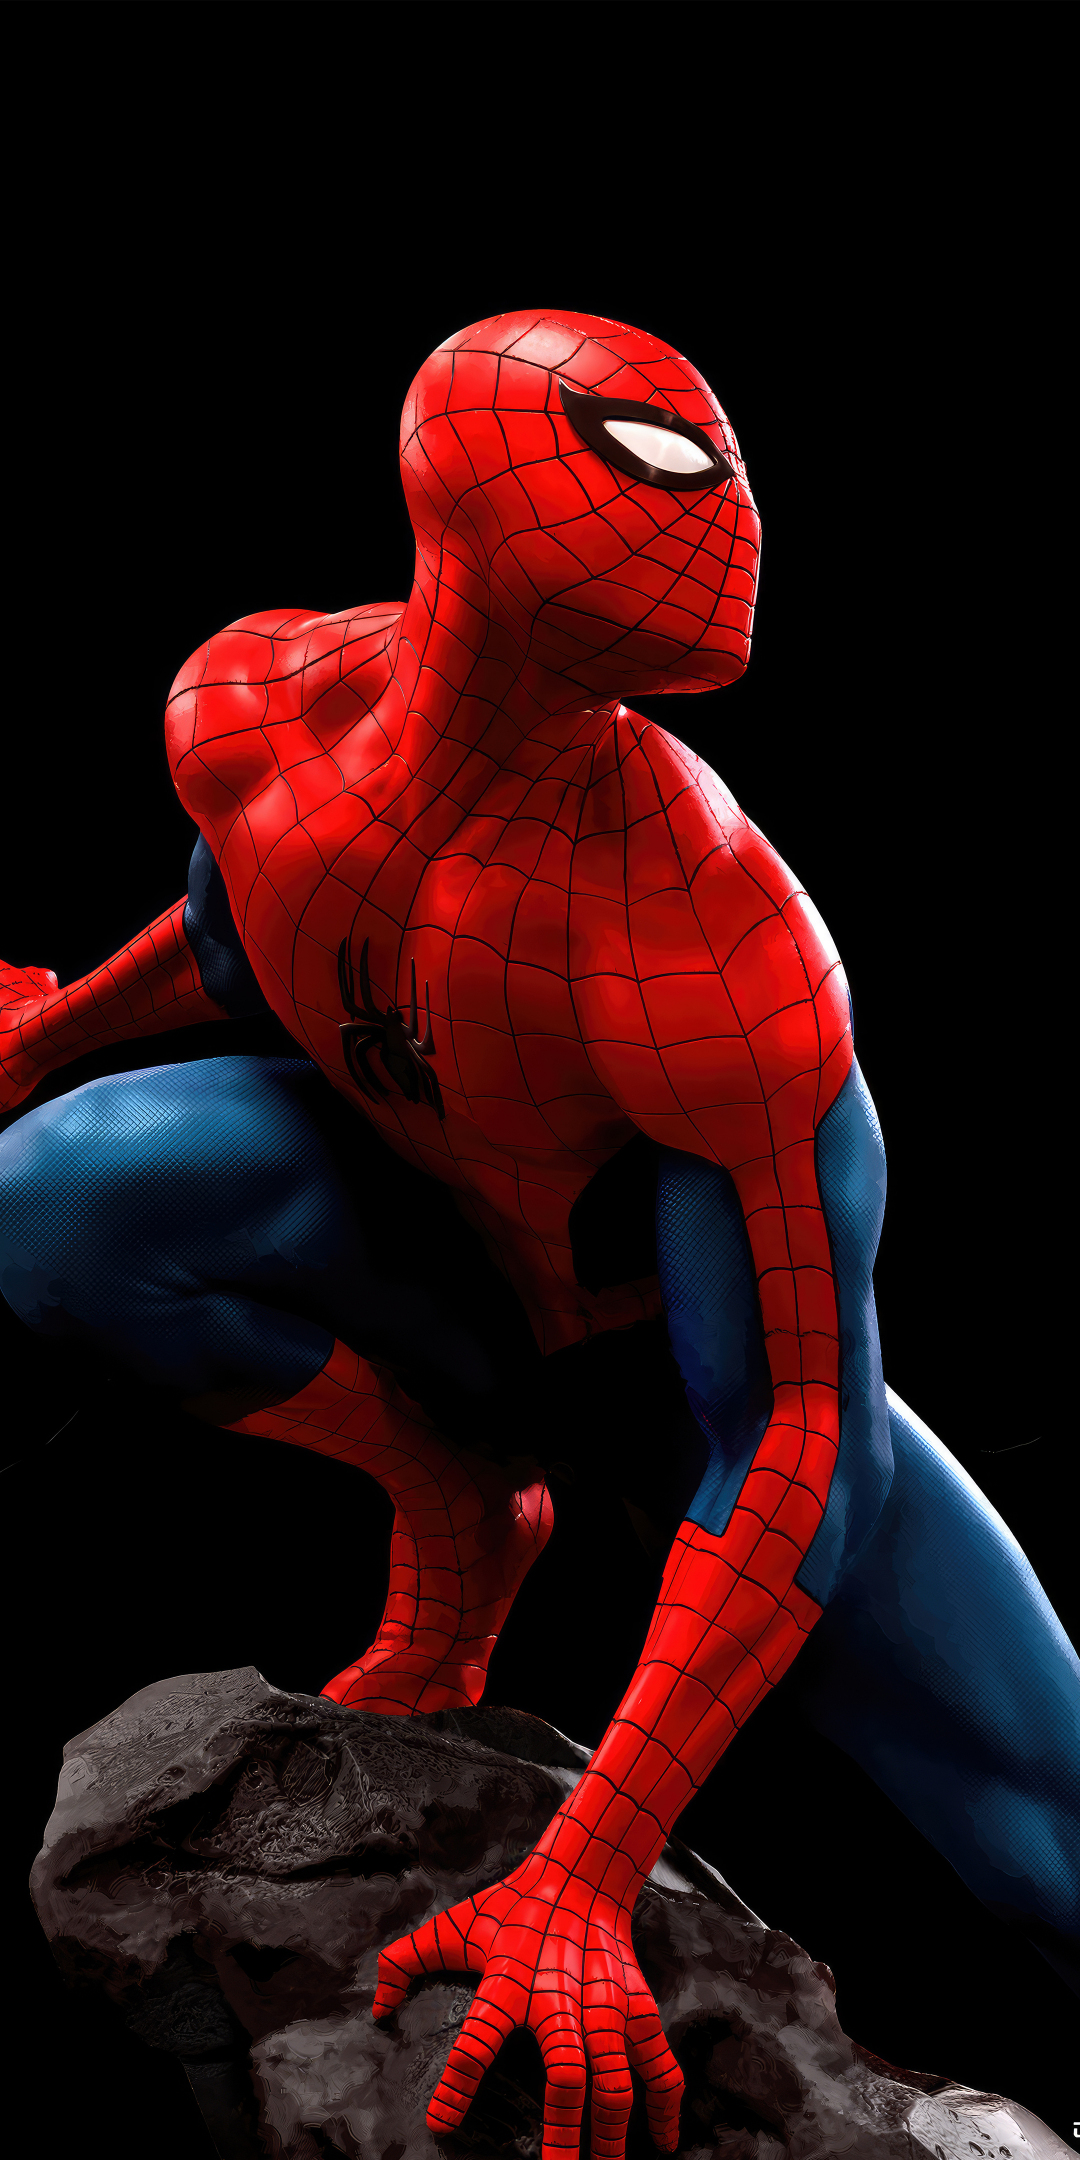 The Amazing spider-man, OLED art, dark, 1080x2160 wallpaper